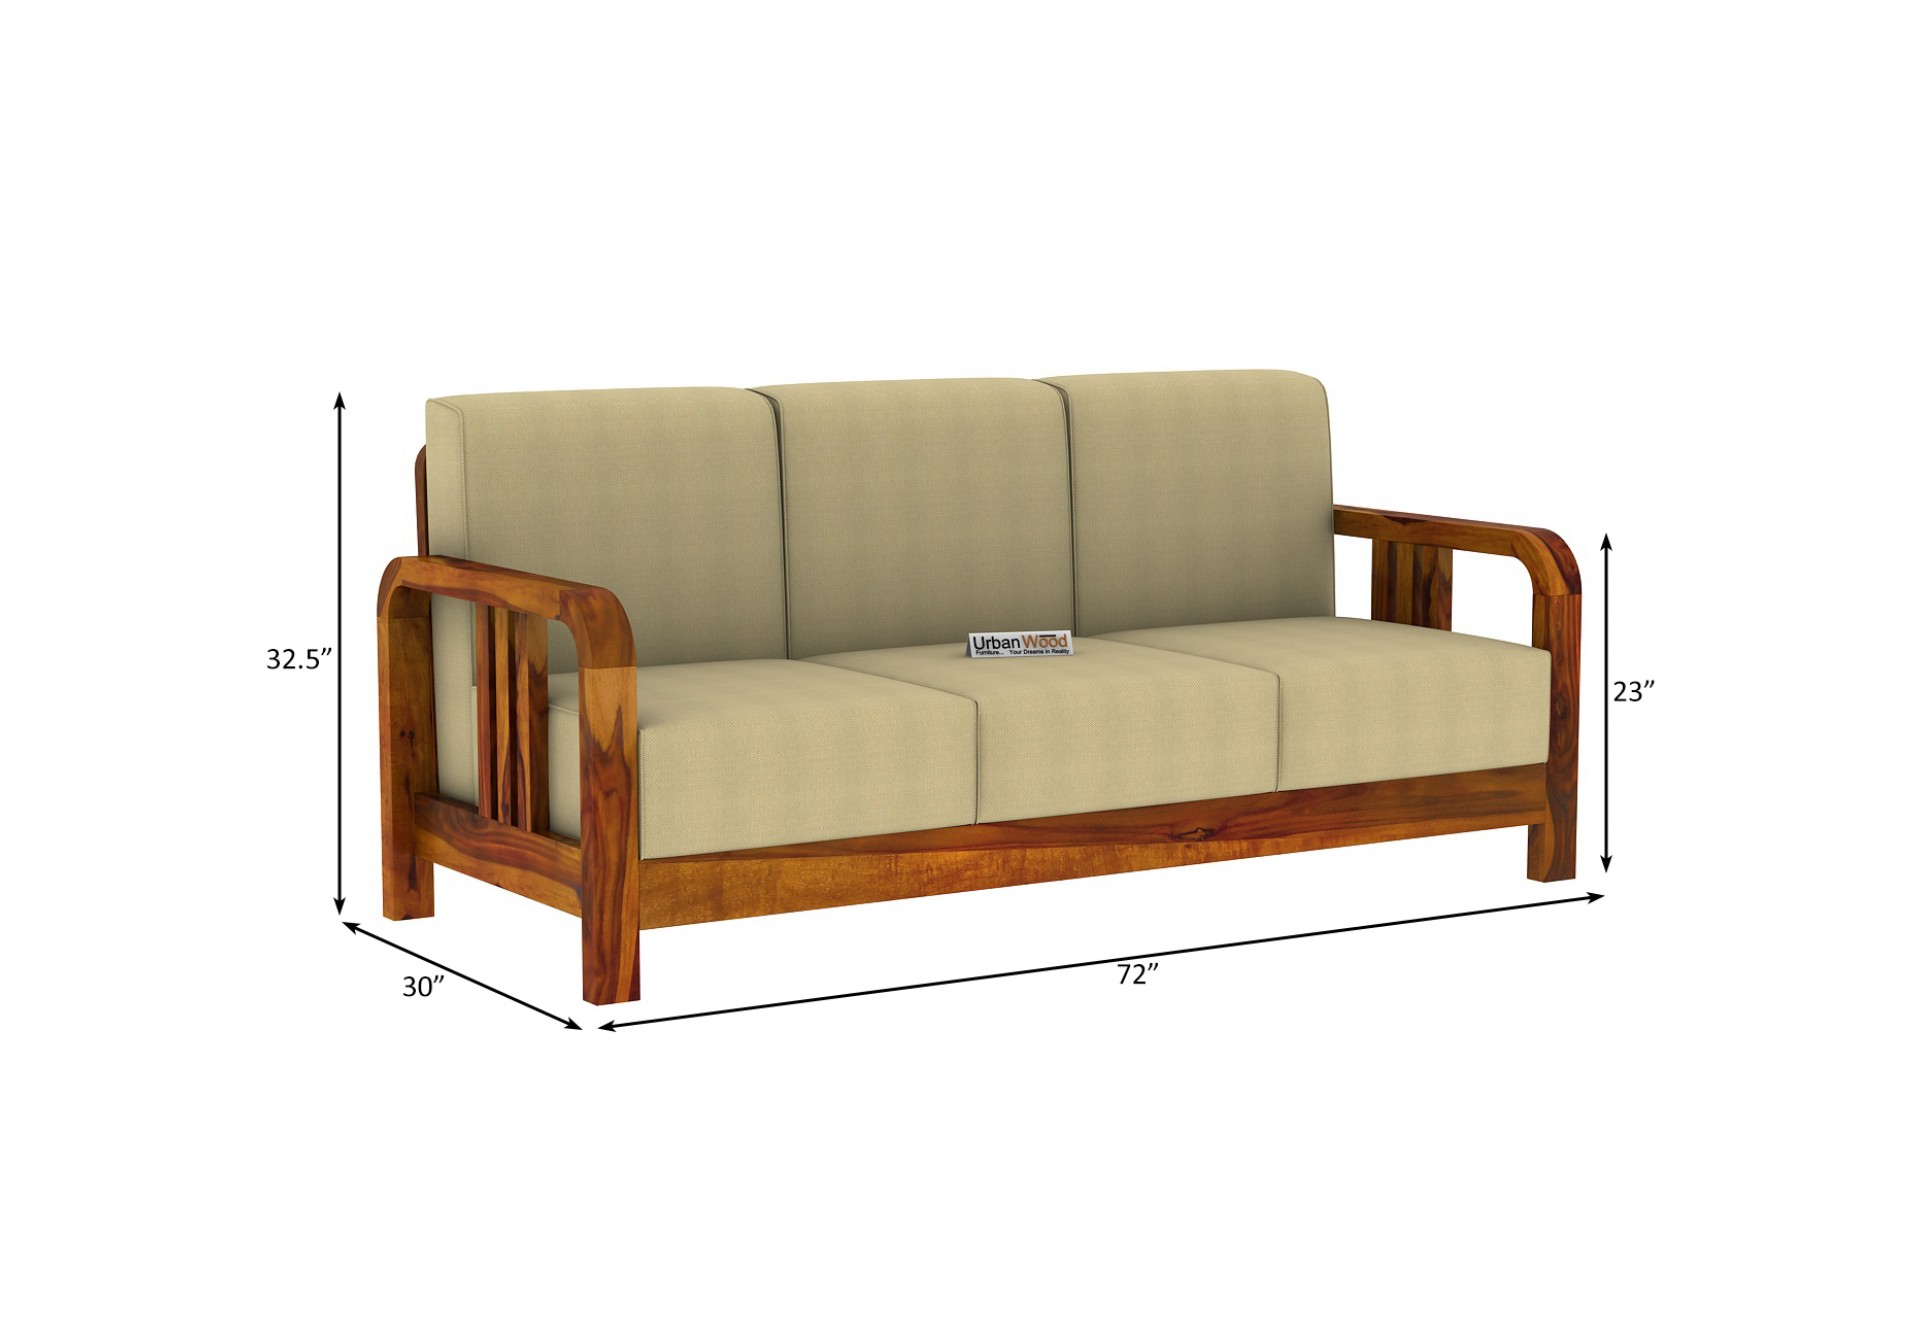 HomeBregg Wooden Sofa Set 3+1+1 Seater ( Honey Finish, Sepia cream)